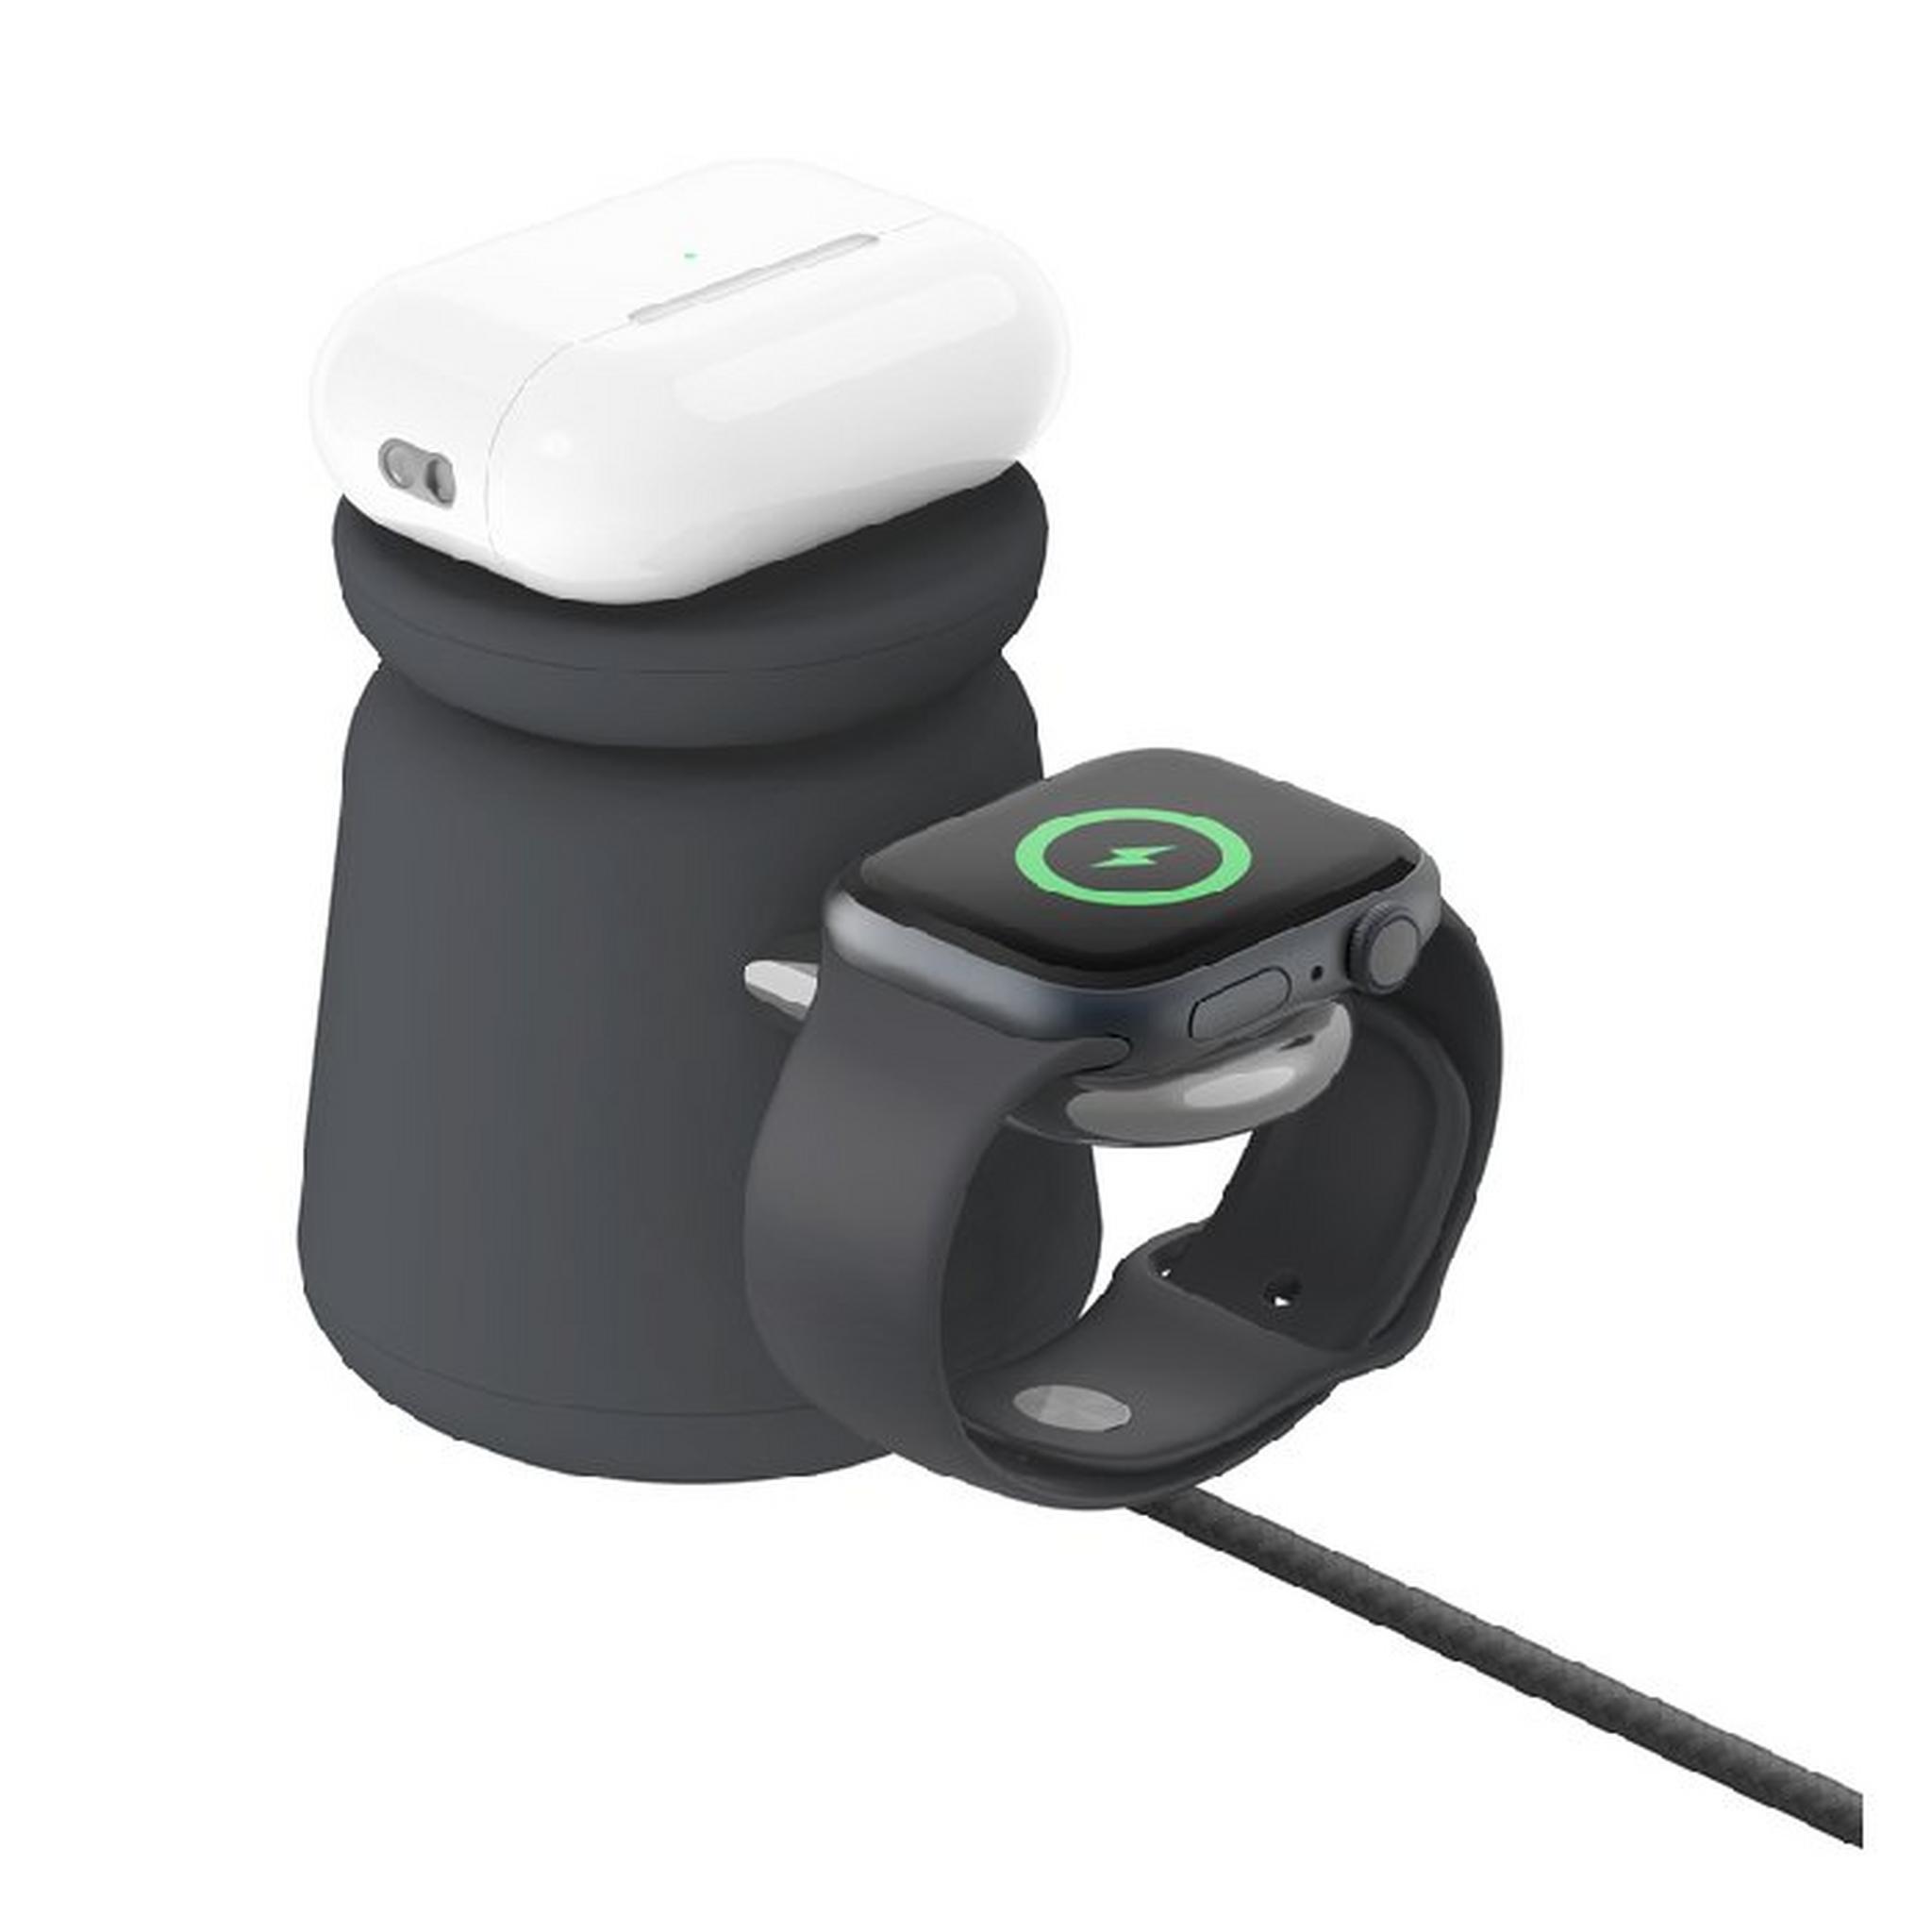 Belkin 2-in-1 Wireless Charging Pro Dock with MagSafe, 15W, WIZ020MYH36 – Black